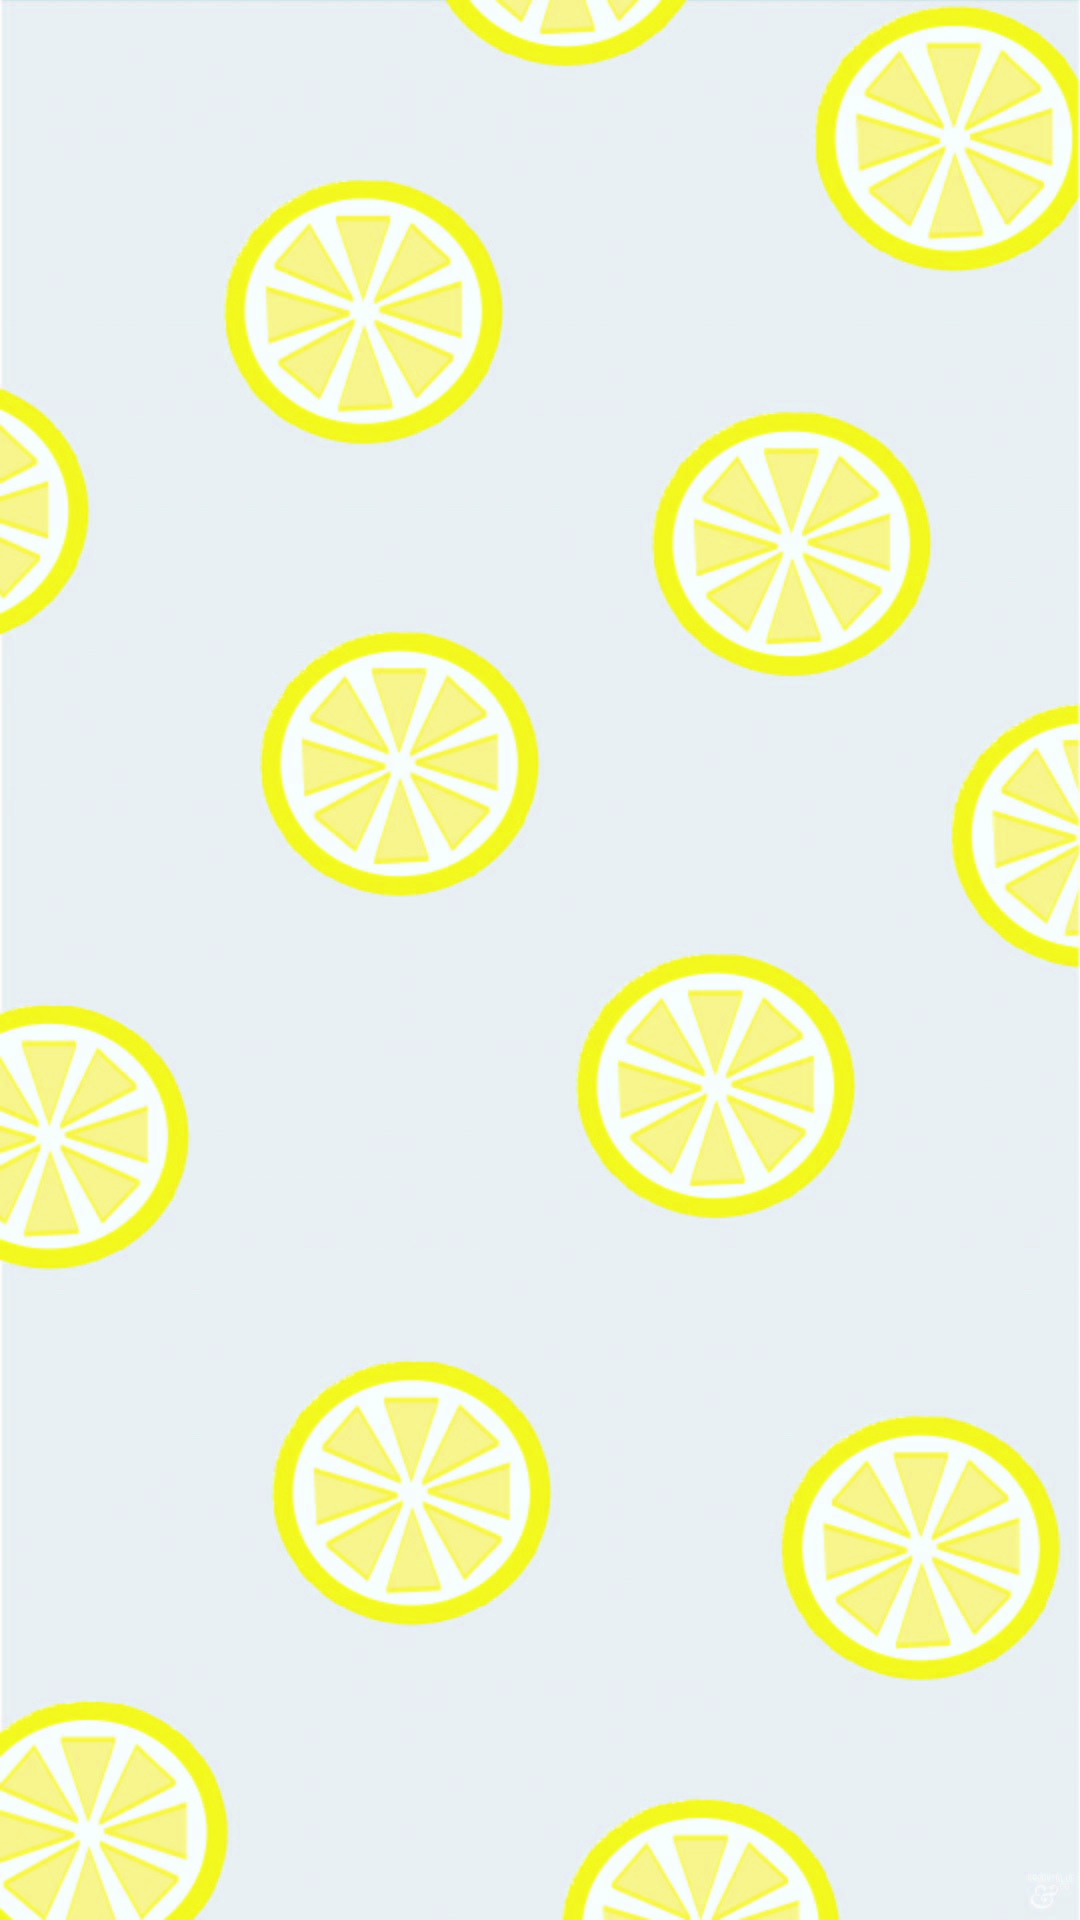 1080x1920 Cute Lemon Wallpaper - Top Free Cute Lemon Background on Wallpape...